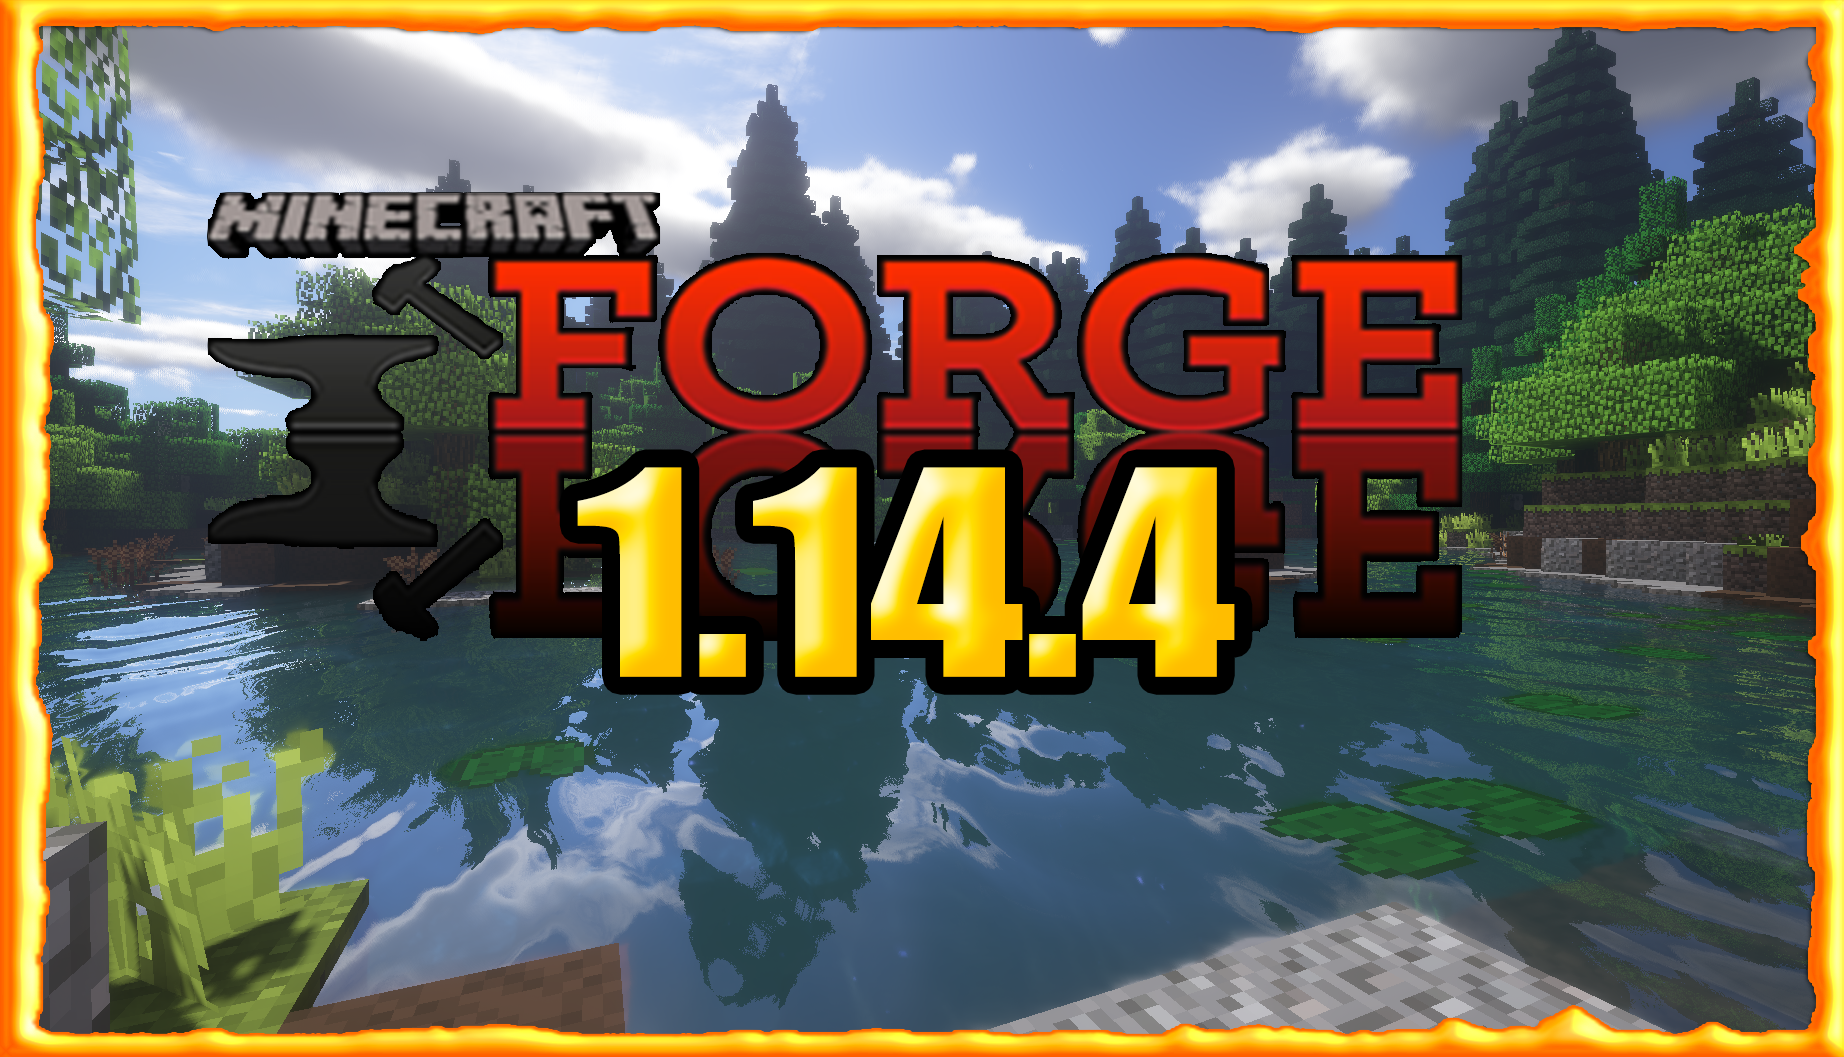 Фордж 1.14.4. Новая версия Forge. Обложка Curse Forge. Сайт Forge майнкрафт взломали. Curse forge 1.16 5